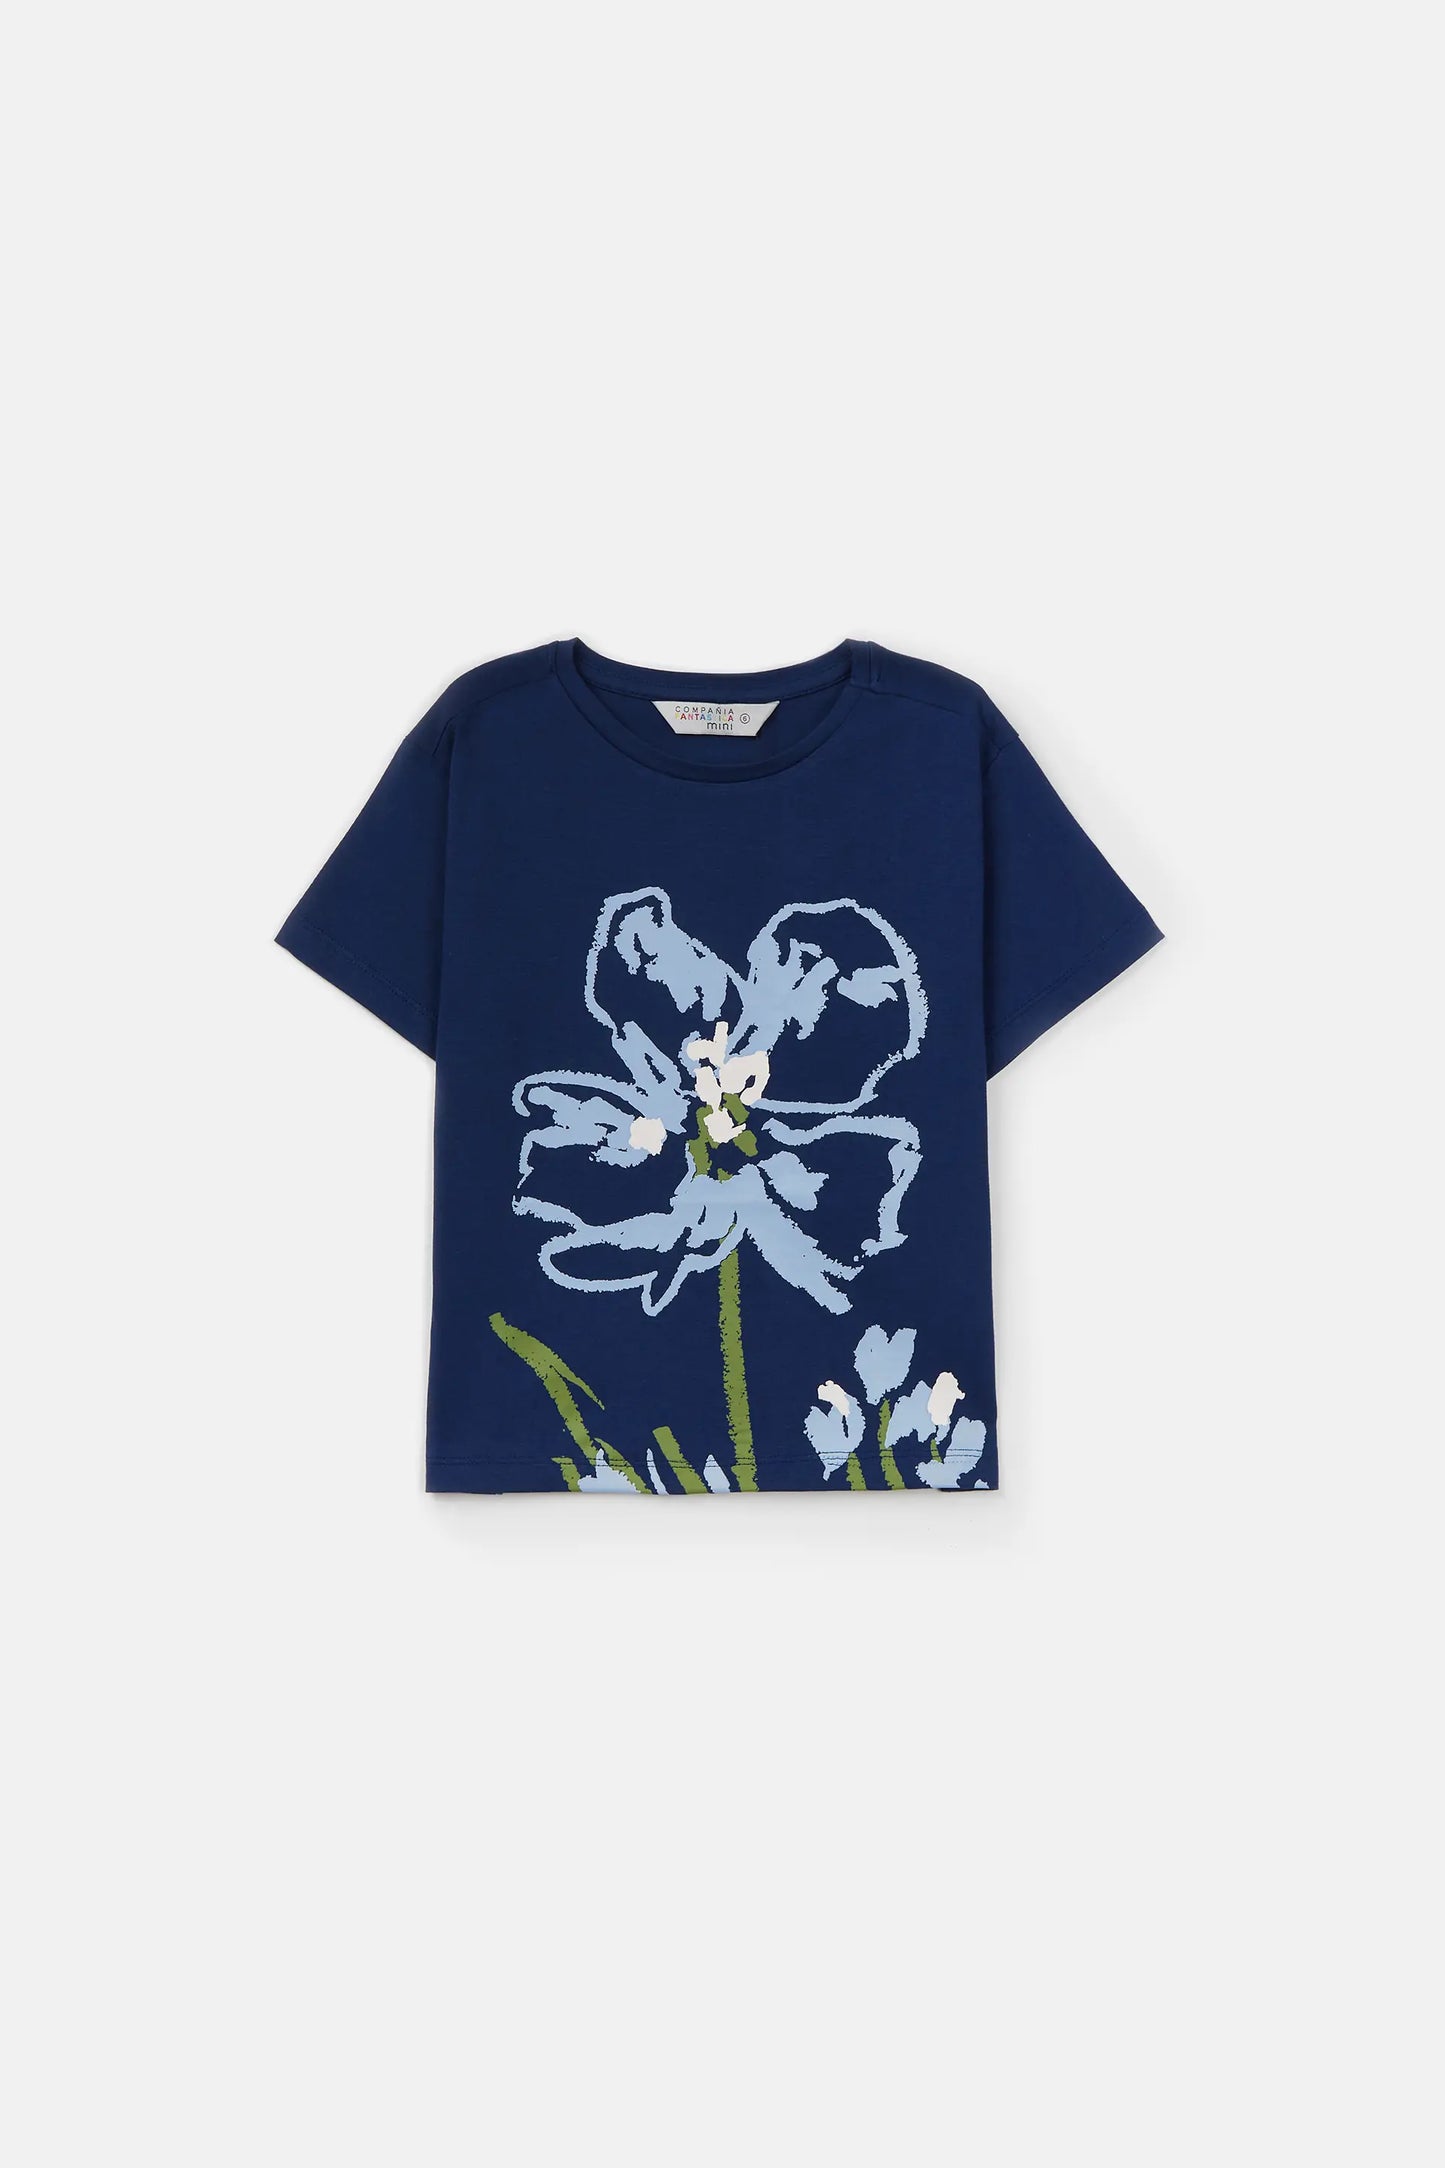 Camiseta unisex de algodón con gráfica floral azul